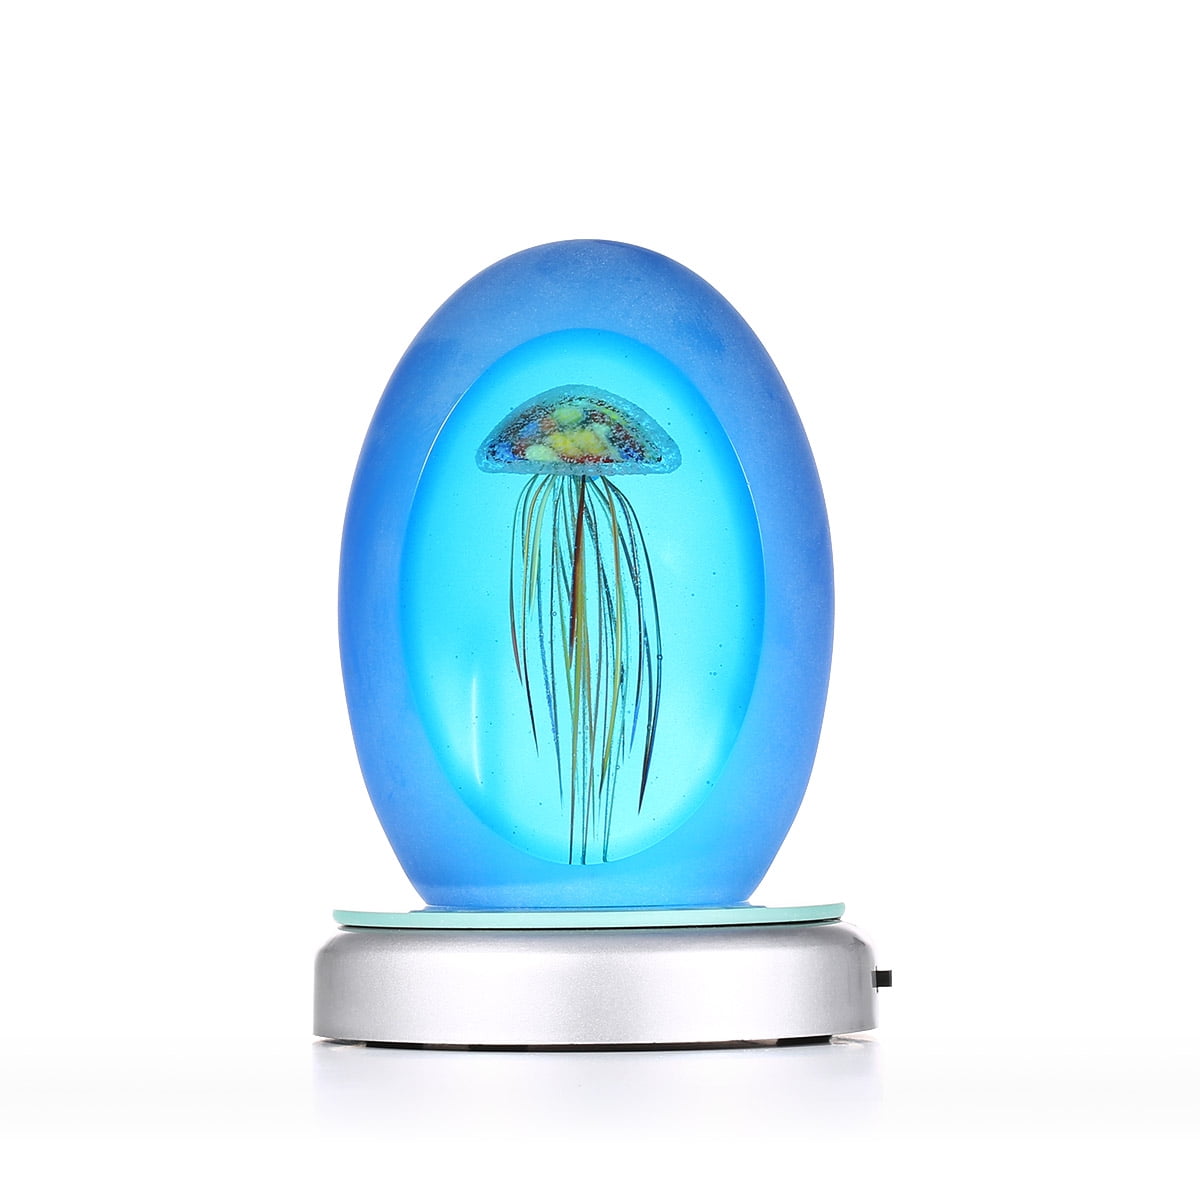 Tooarts Glass Jellyfish Gift Blue Ornament Animal Figurine Handblown Art Modern Ornaments for the Home